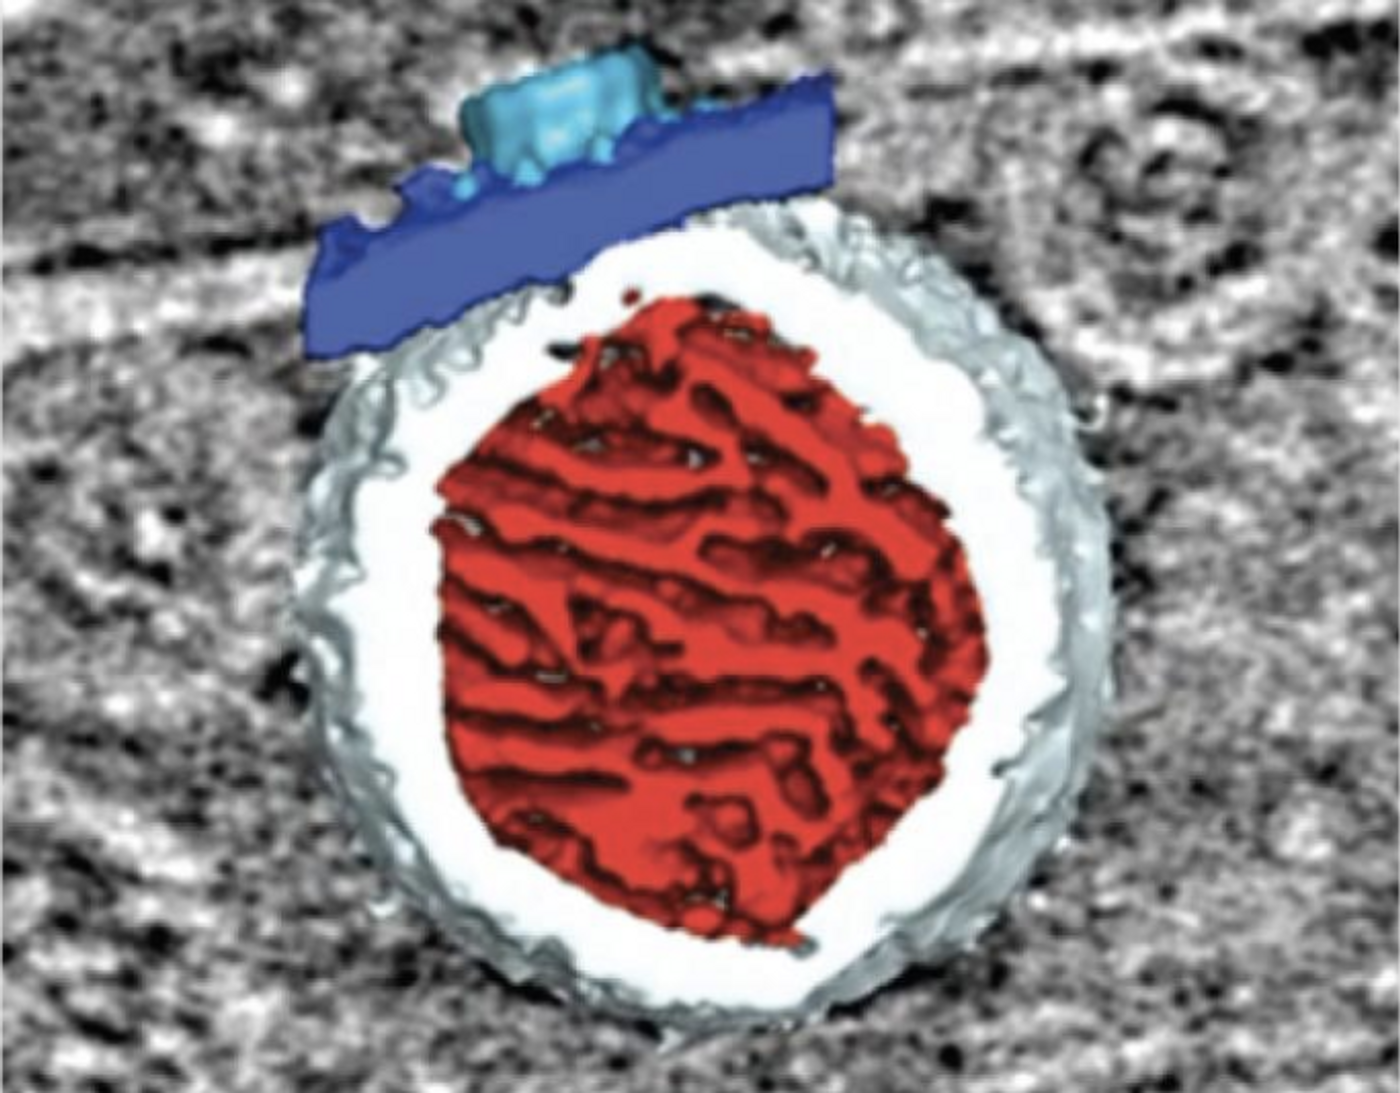 Pictured is a 3-D rendering of a virus RNA replication spherule. The mitochondrial outer membrane is in dark blue, the spherule membrane in white, the interior spherule RNA density in red, and the spherule crown aperture in light blue. / Credit: UW-Madison